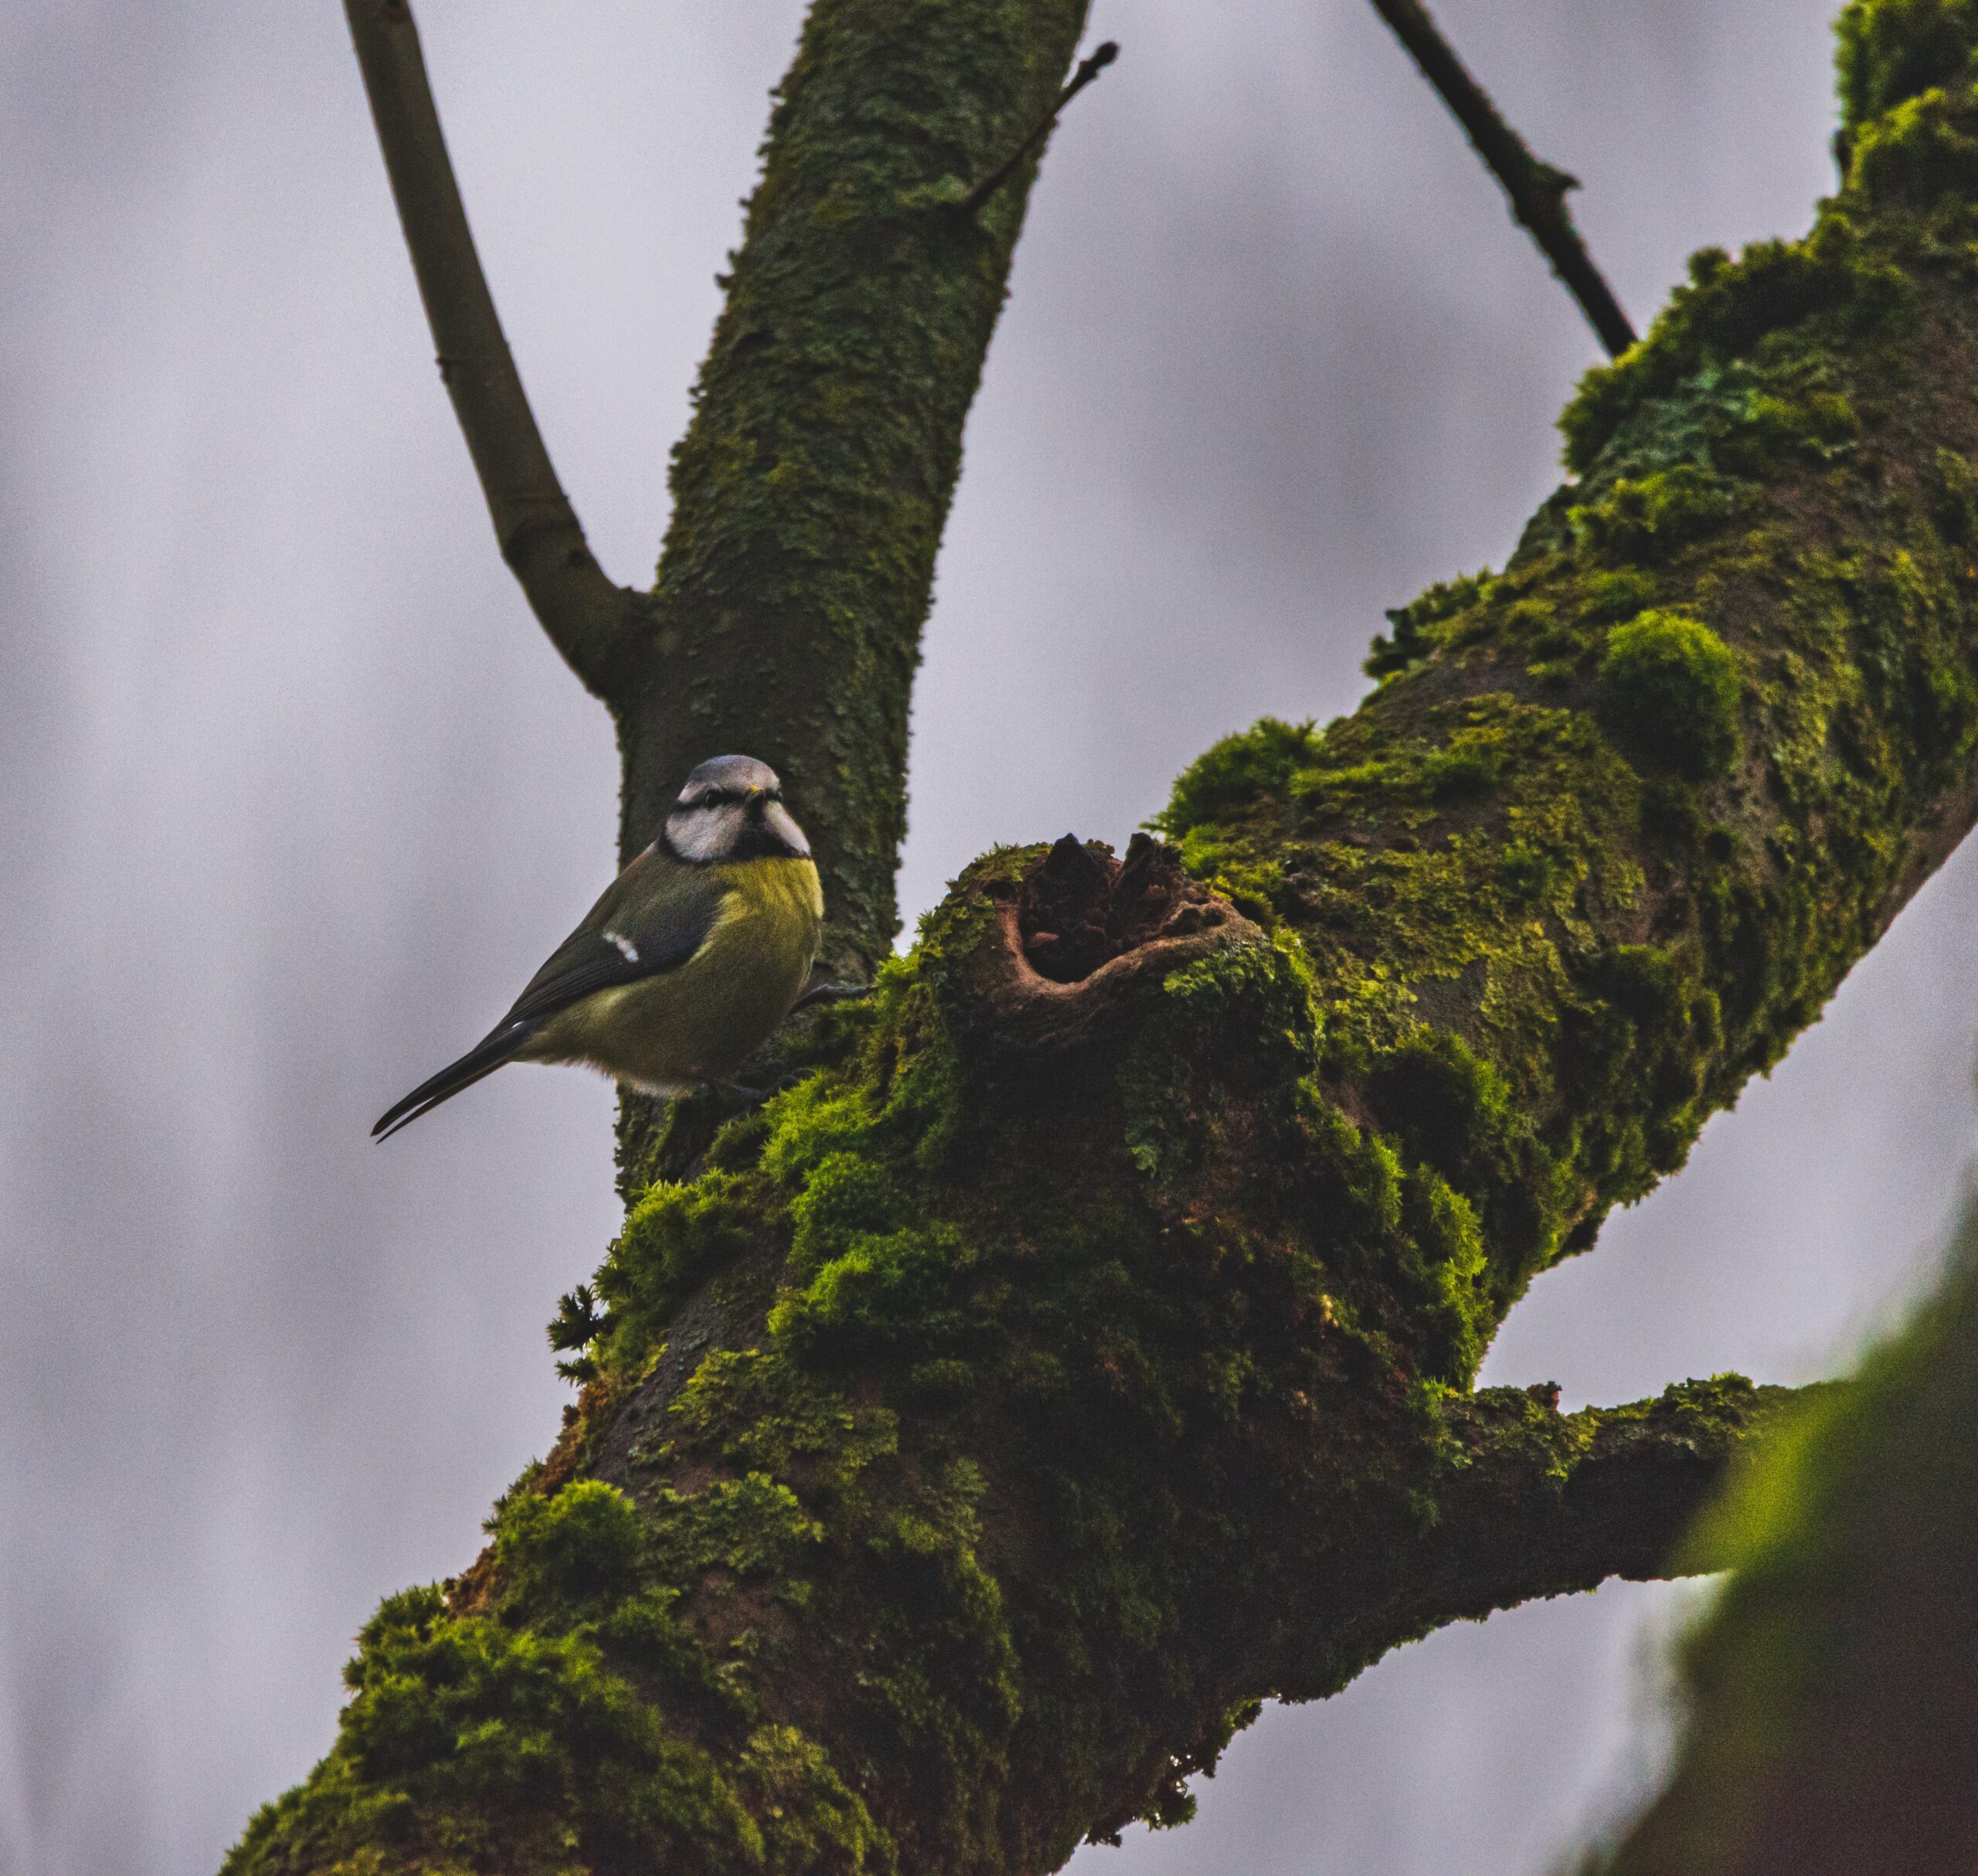 Songbird on mossy branch of tree